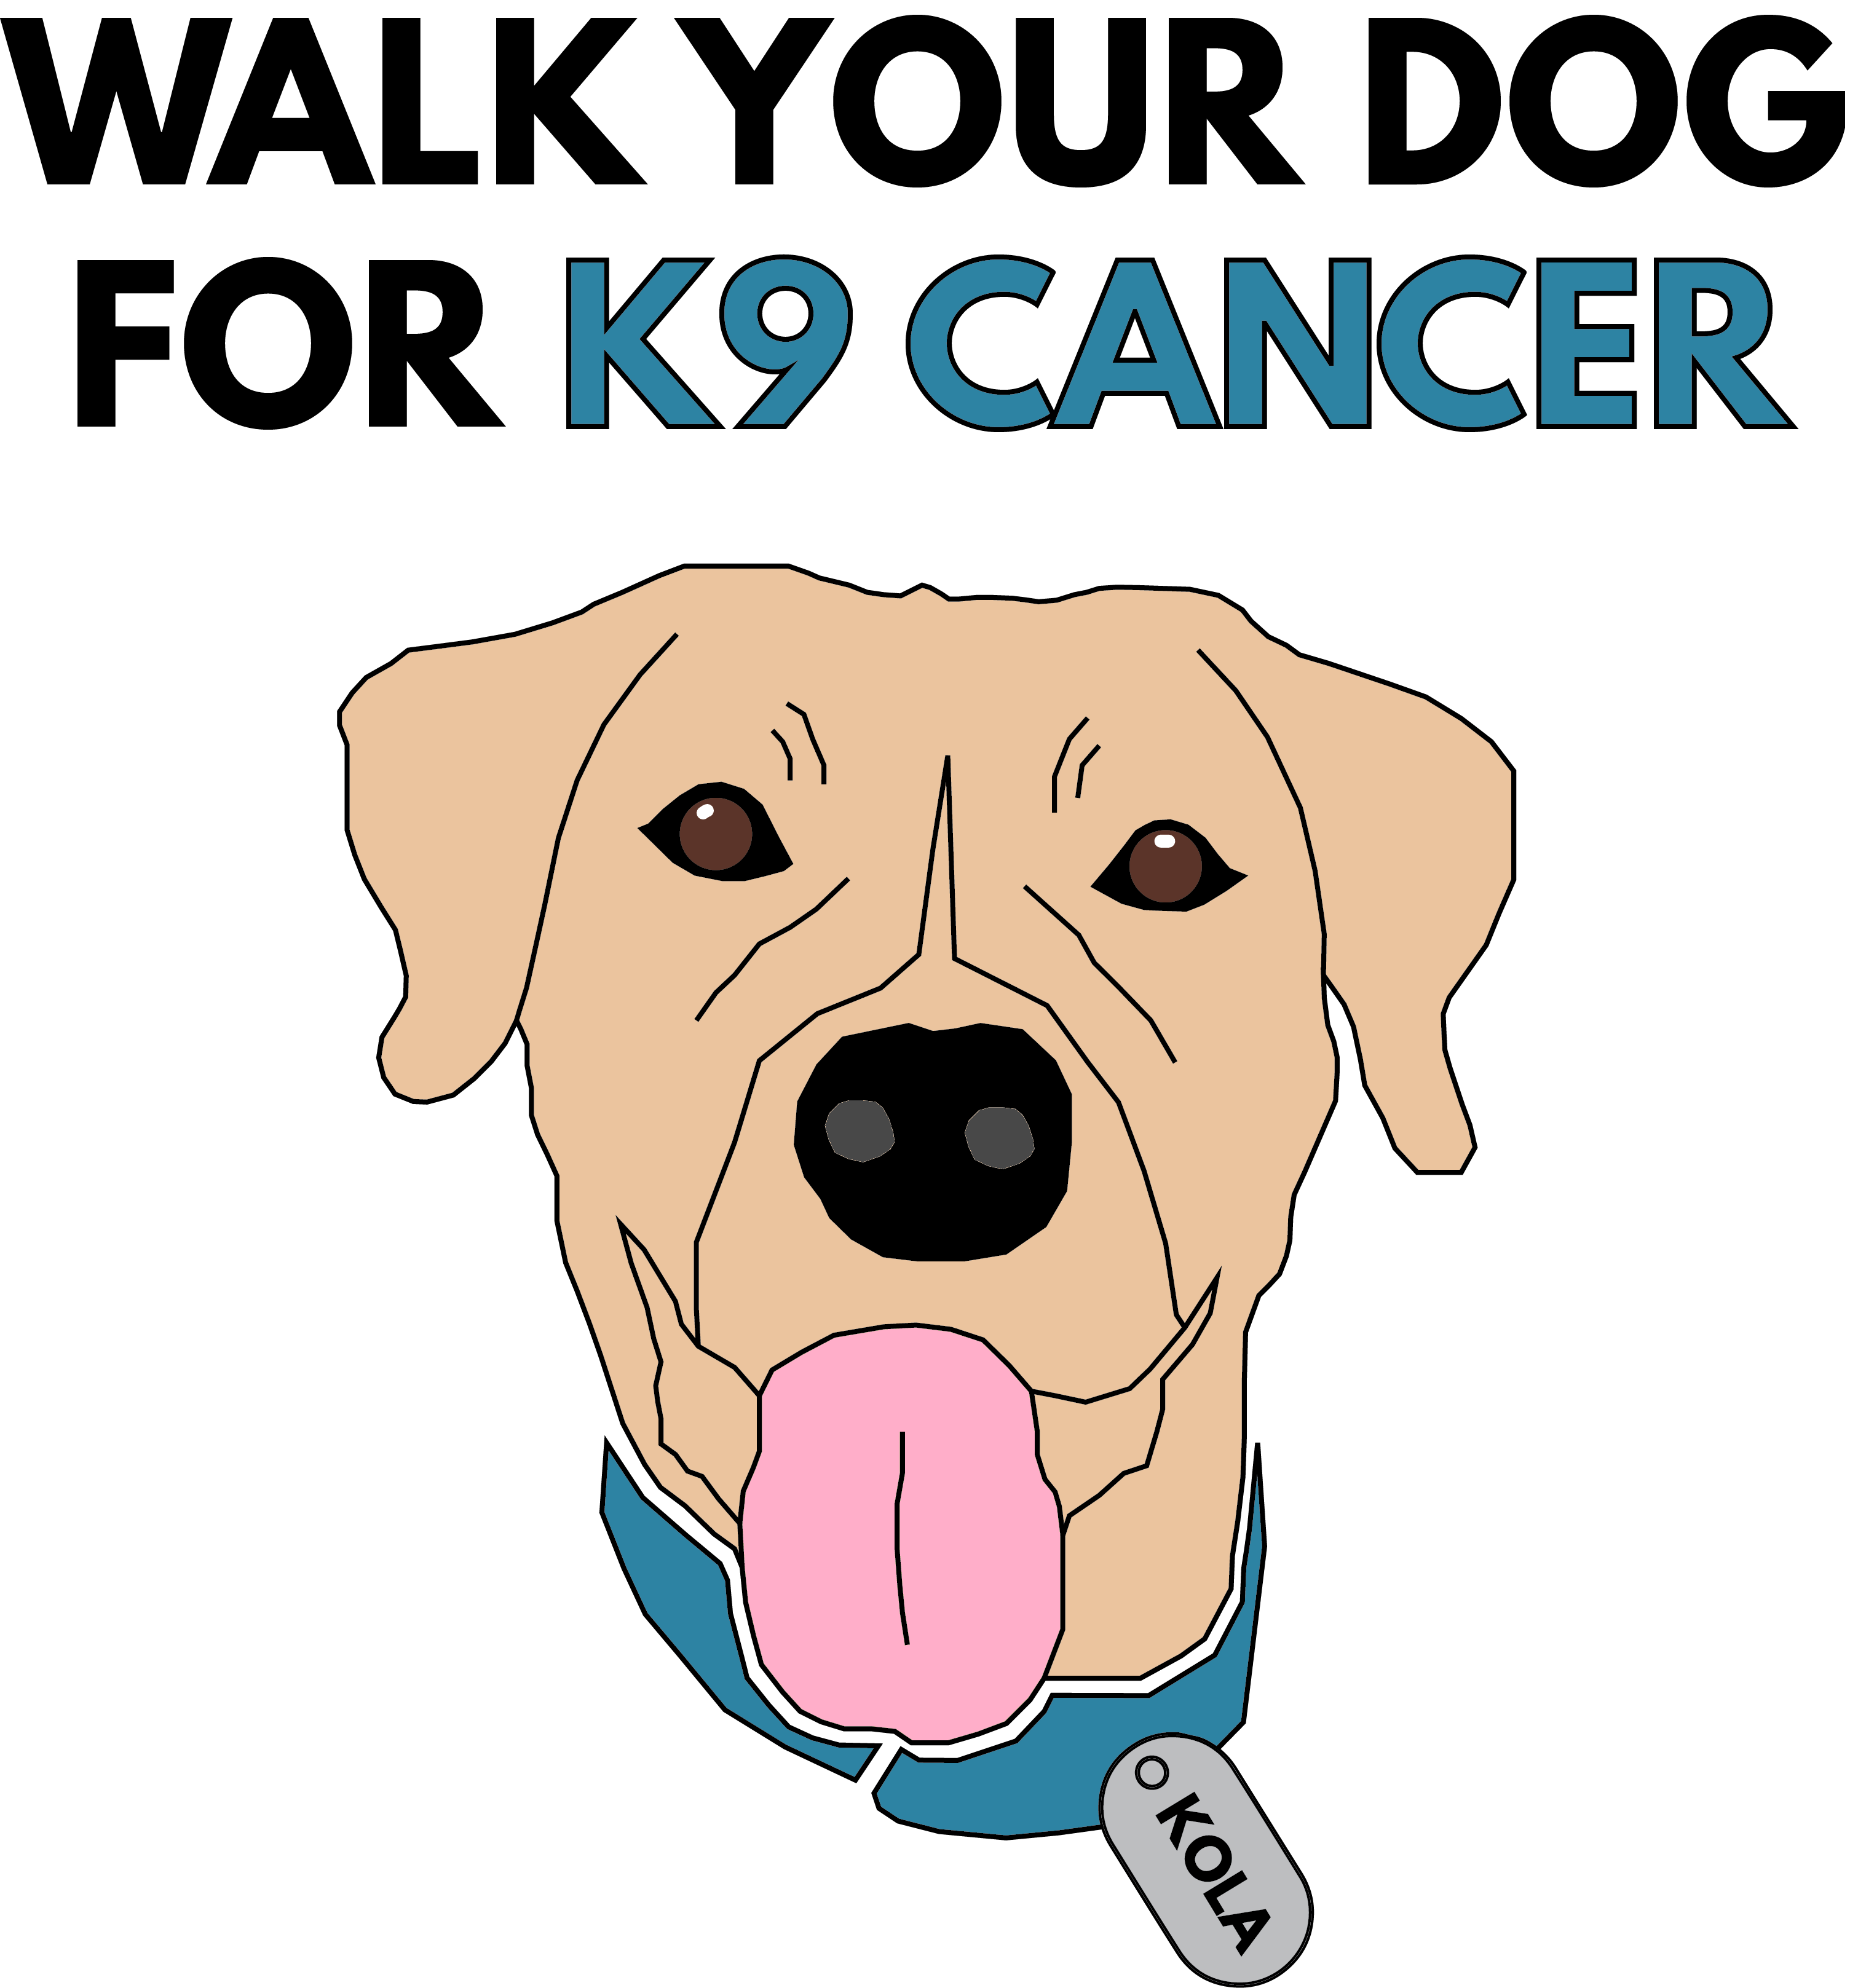 Walk Your Dog For K9 Cancer